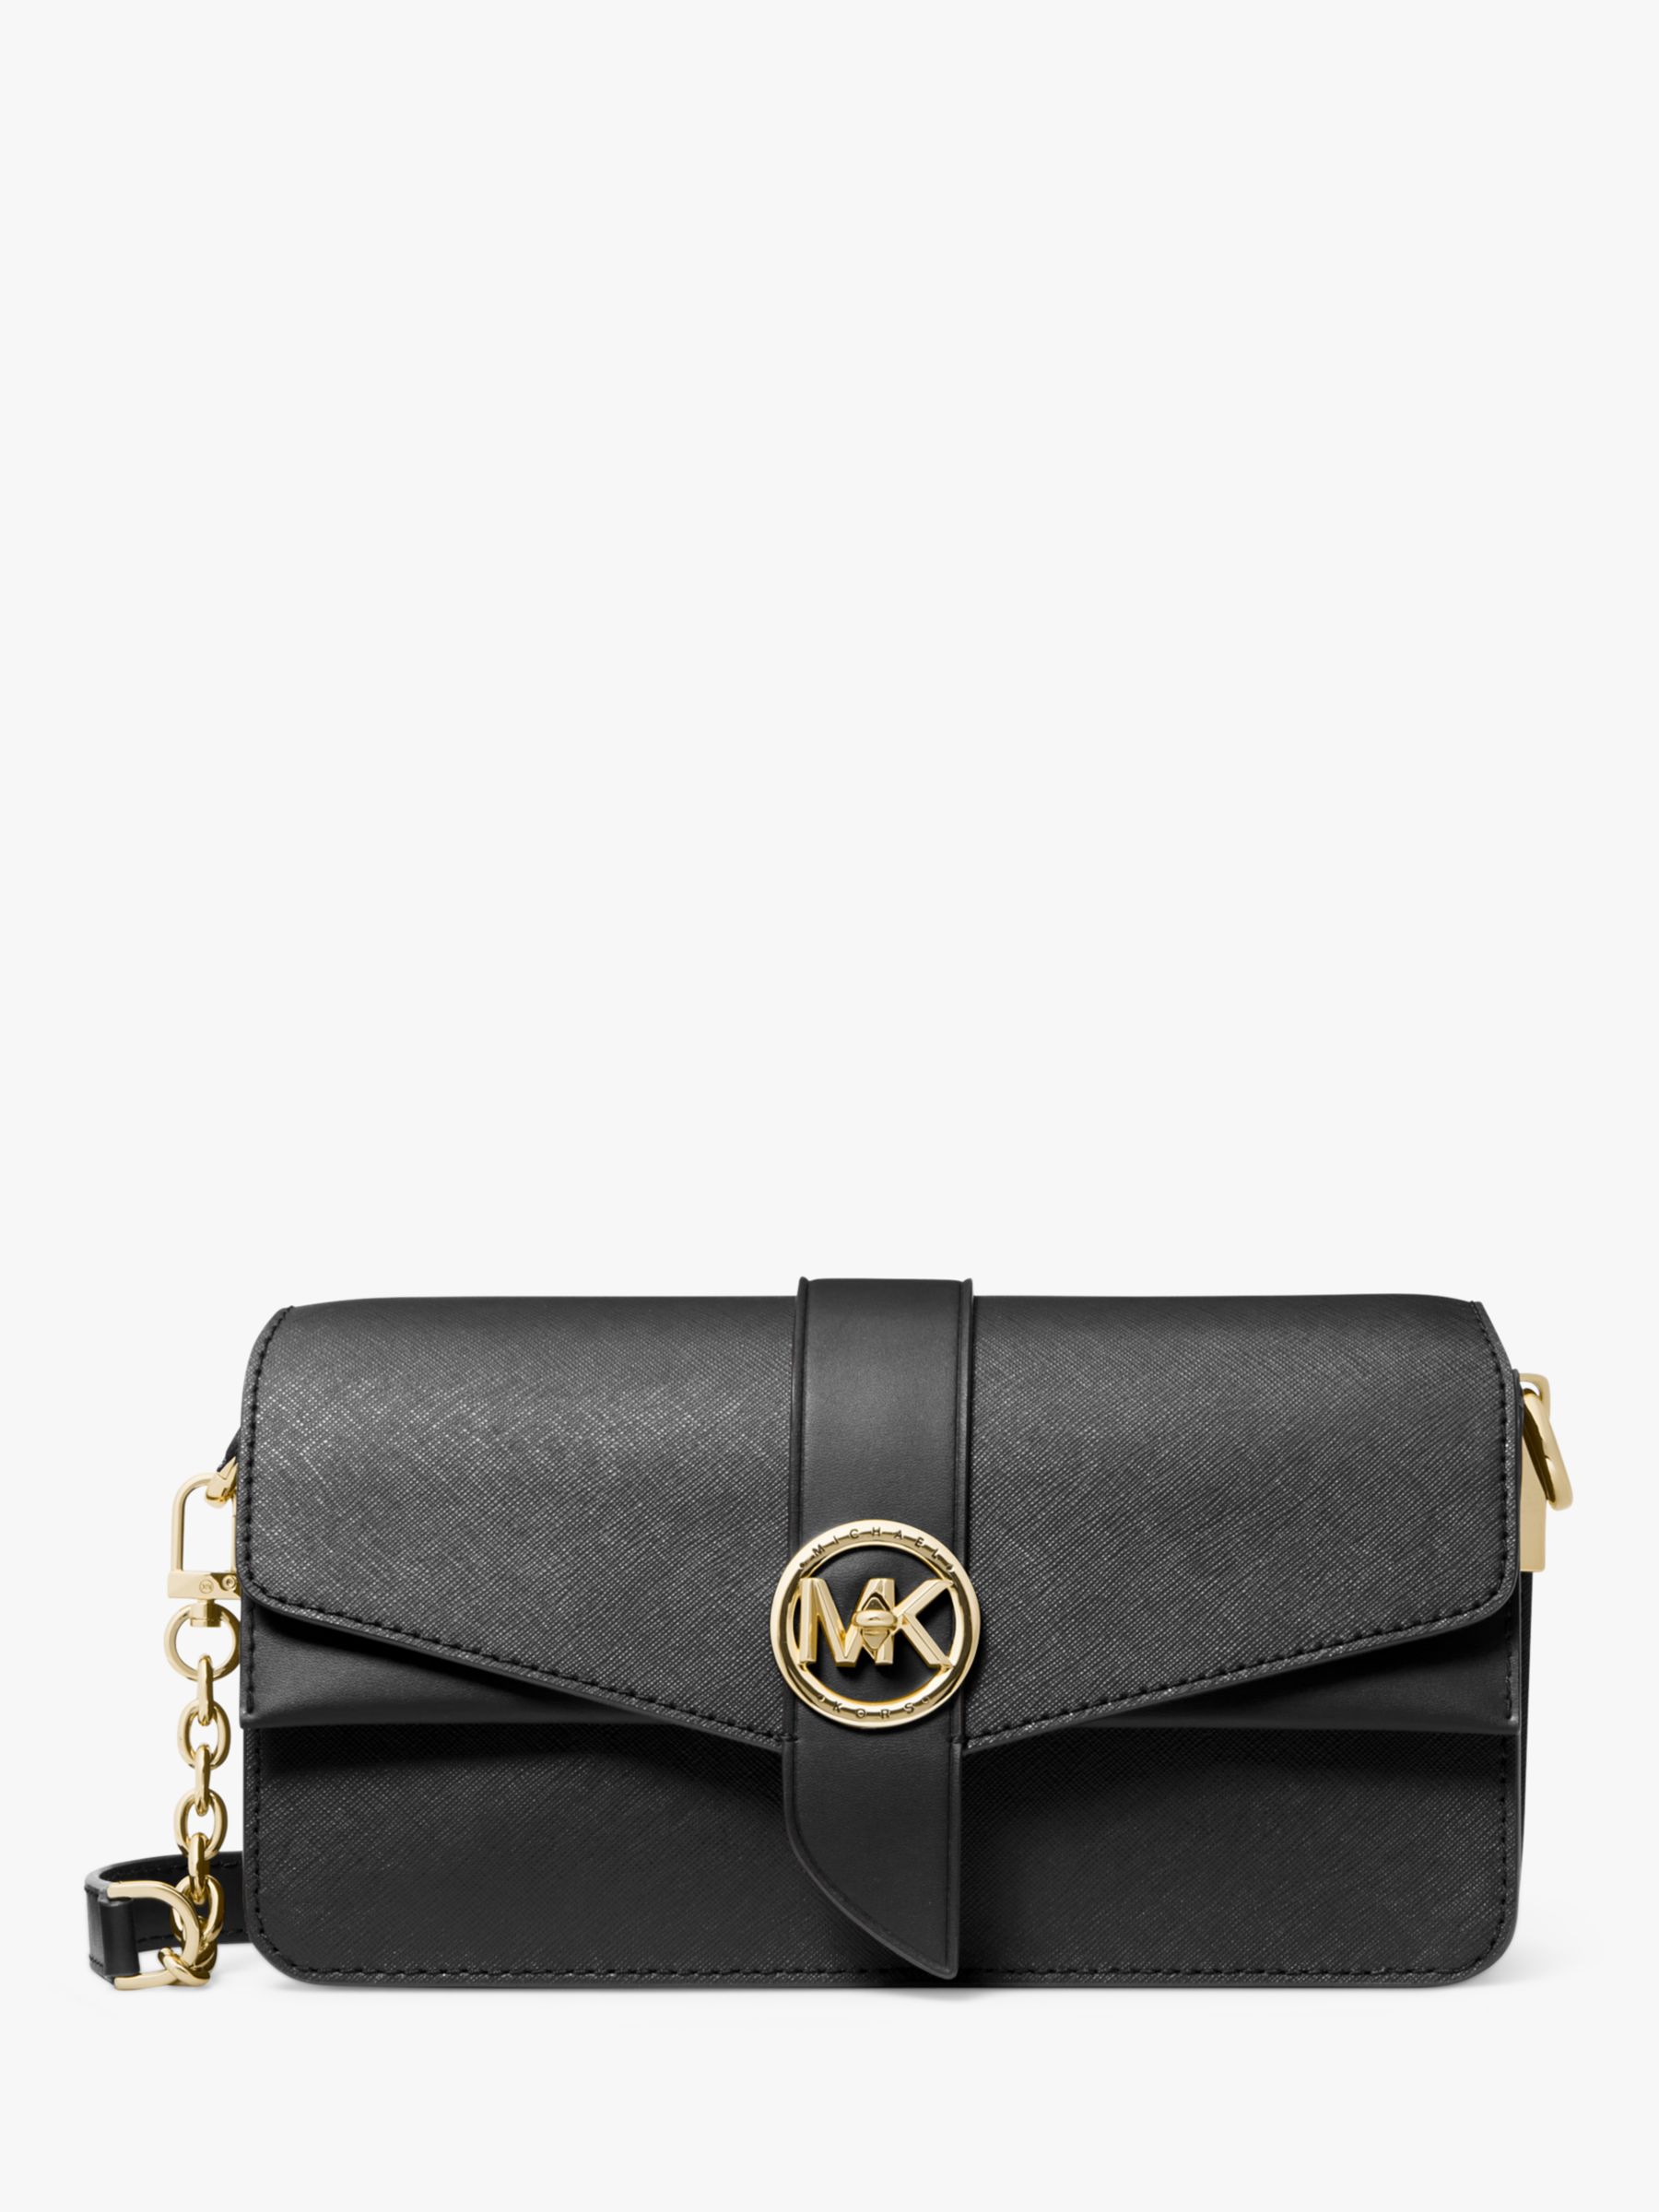 MICHAEL Michael Kors Greenwich Leather Shoulder Bag, Black